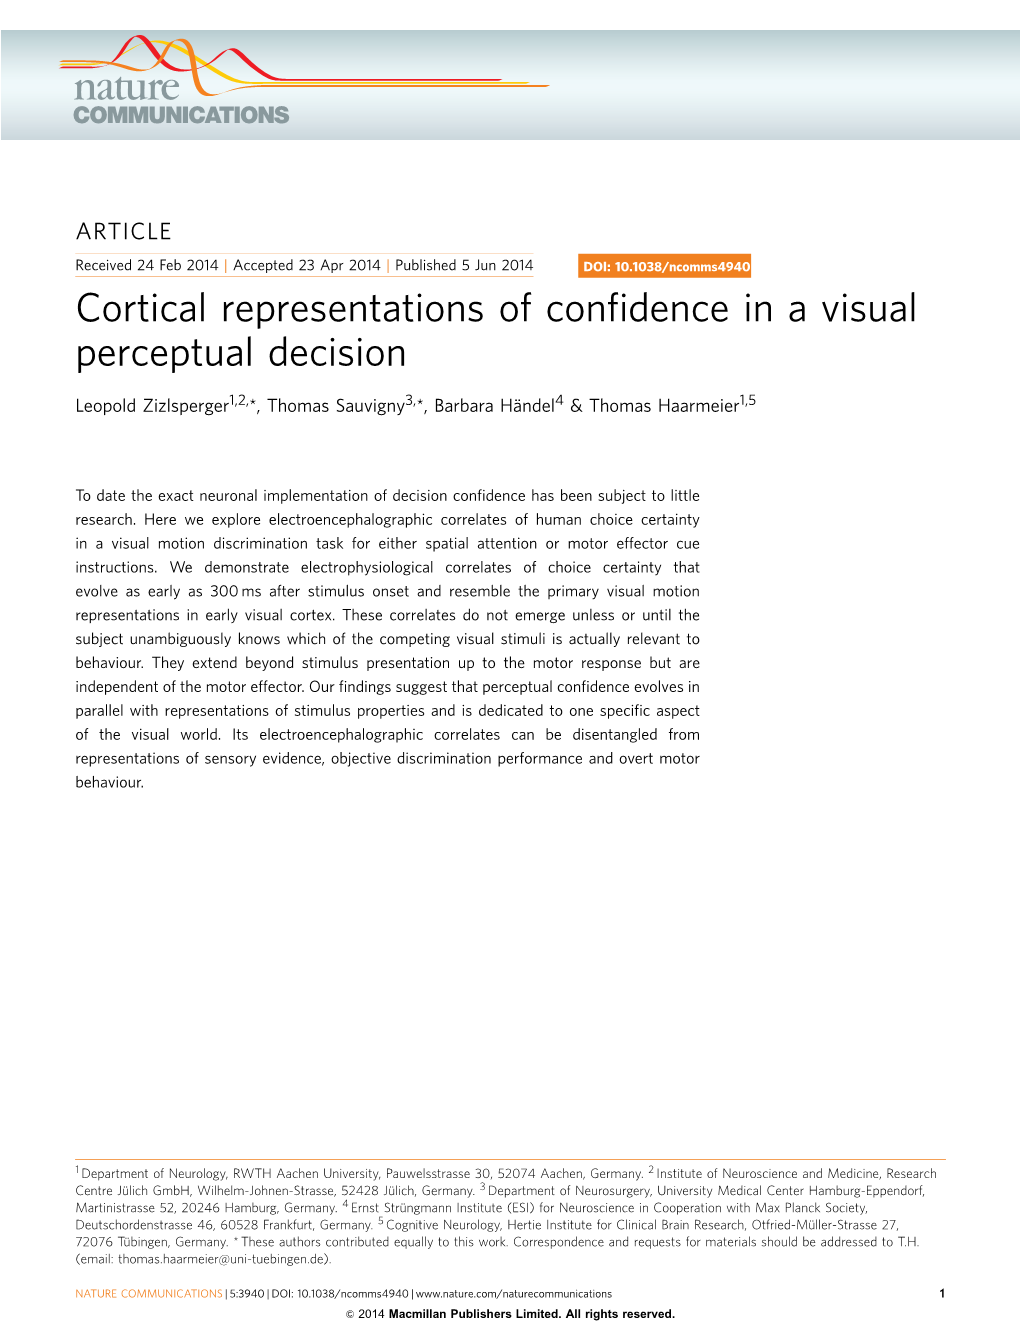 Cortical Representations of Confidence in a Visual Perceptual Decision